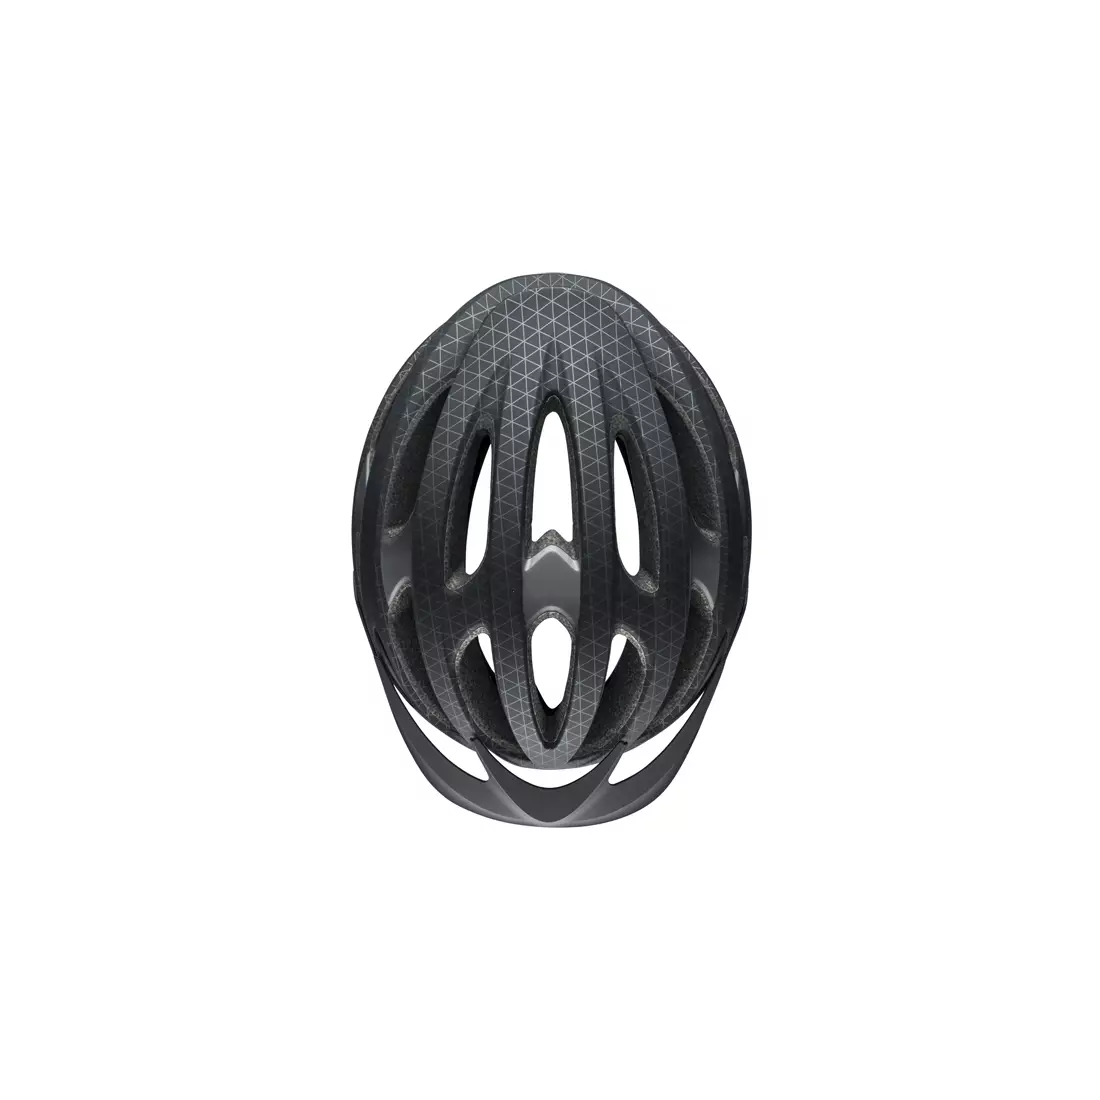 BELL MTB DRIFTER MIPS BEL-7088621 bicycle helmet matte gloss black gunmetal